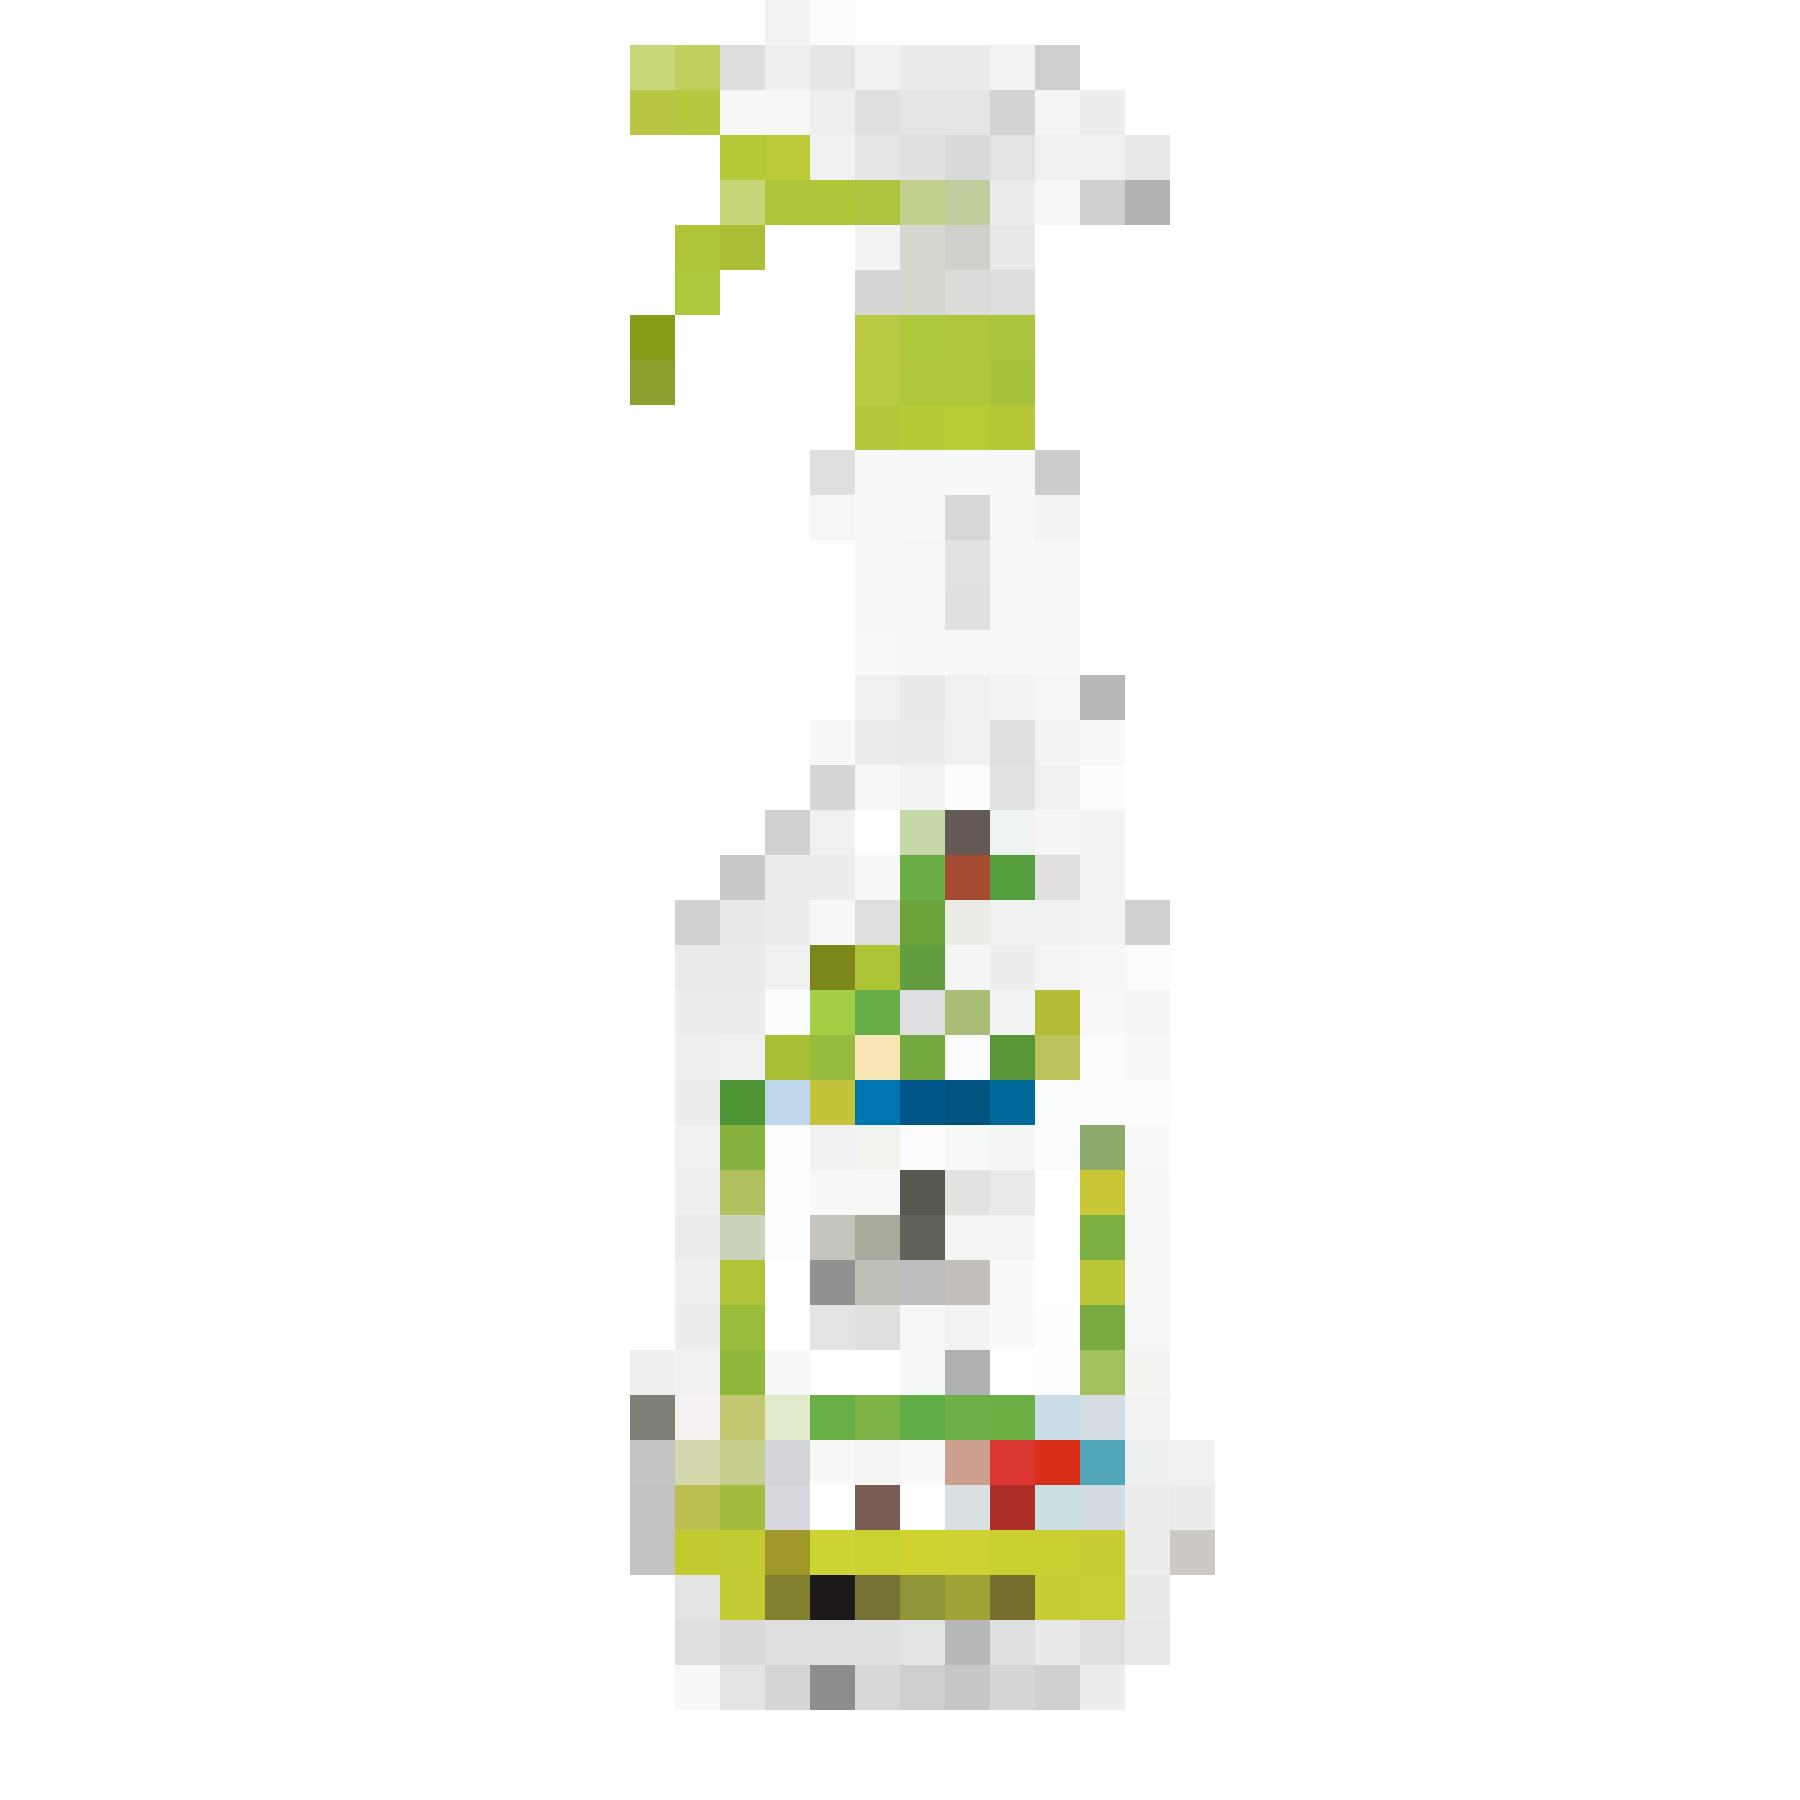 Adieu les traces:  
Spray nettoyant pour vitres
Oecoplan, 3 fr. 25/500 ml,
Coop Brico+Loisirs